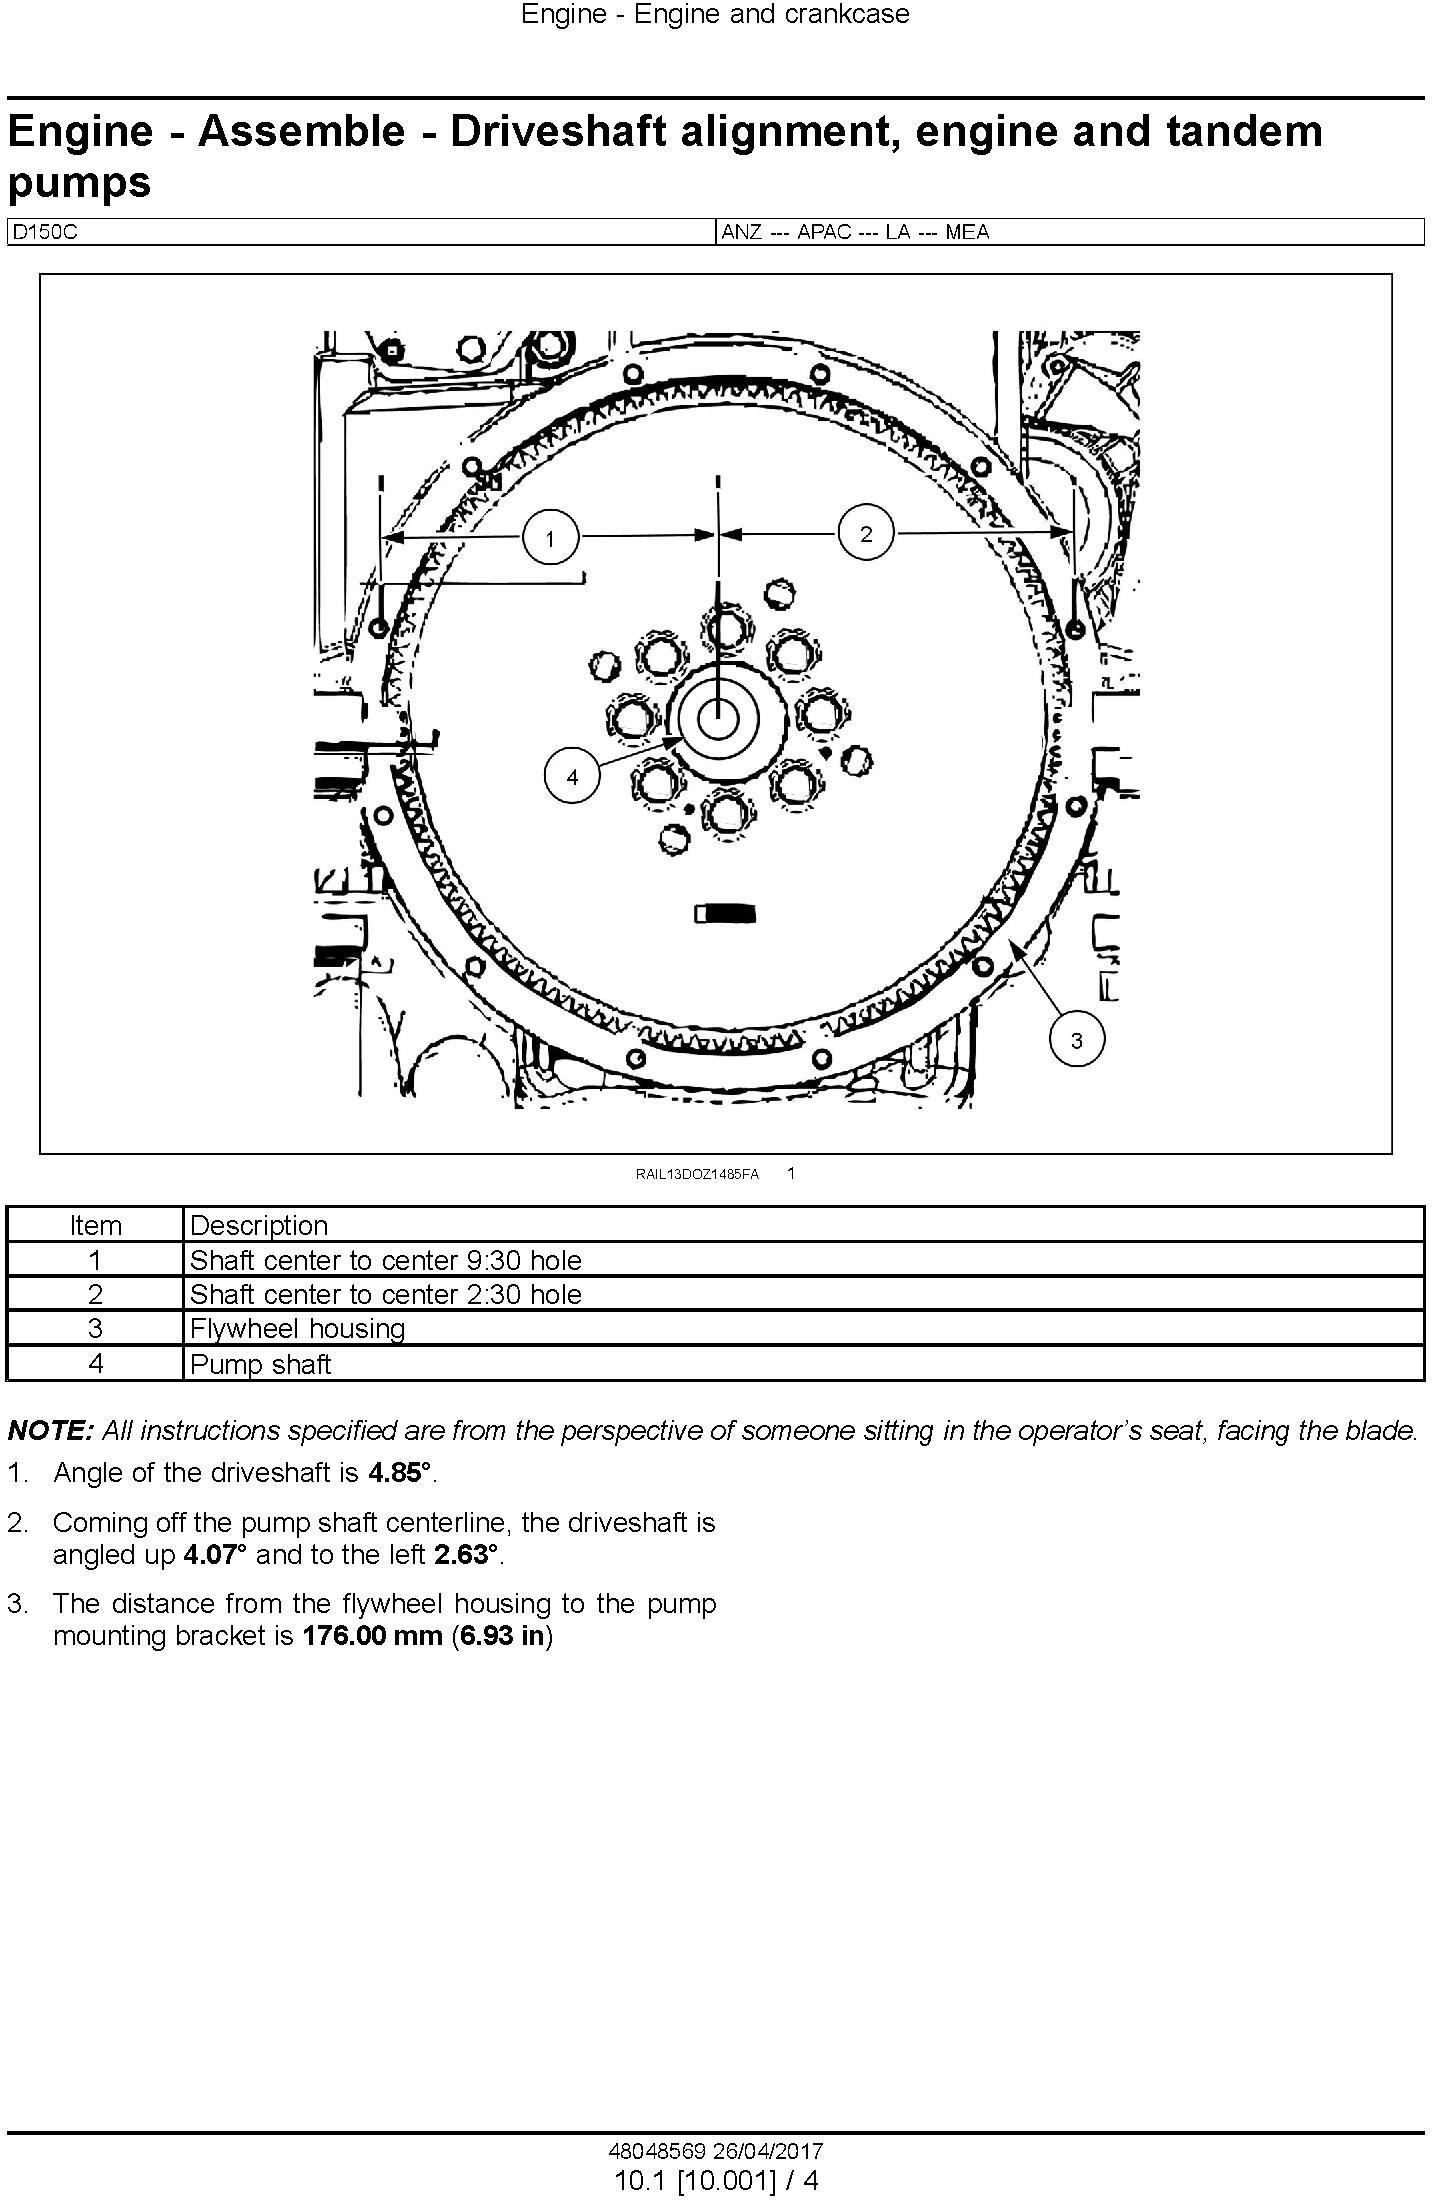 New Holland D150C Tier 2 Crawler Dozer Service Manual - 1